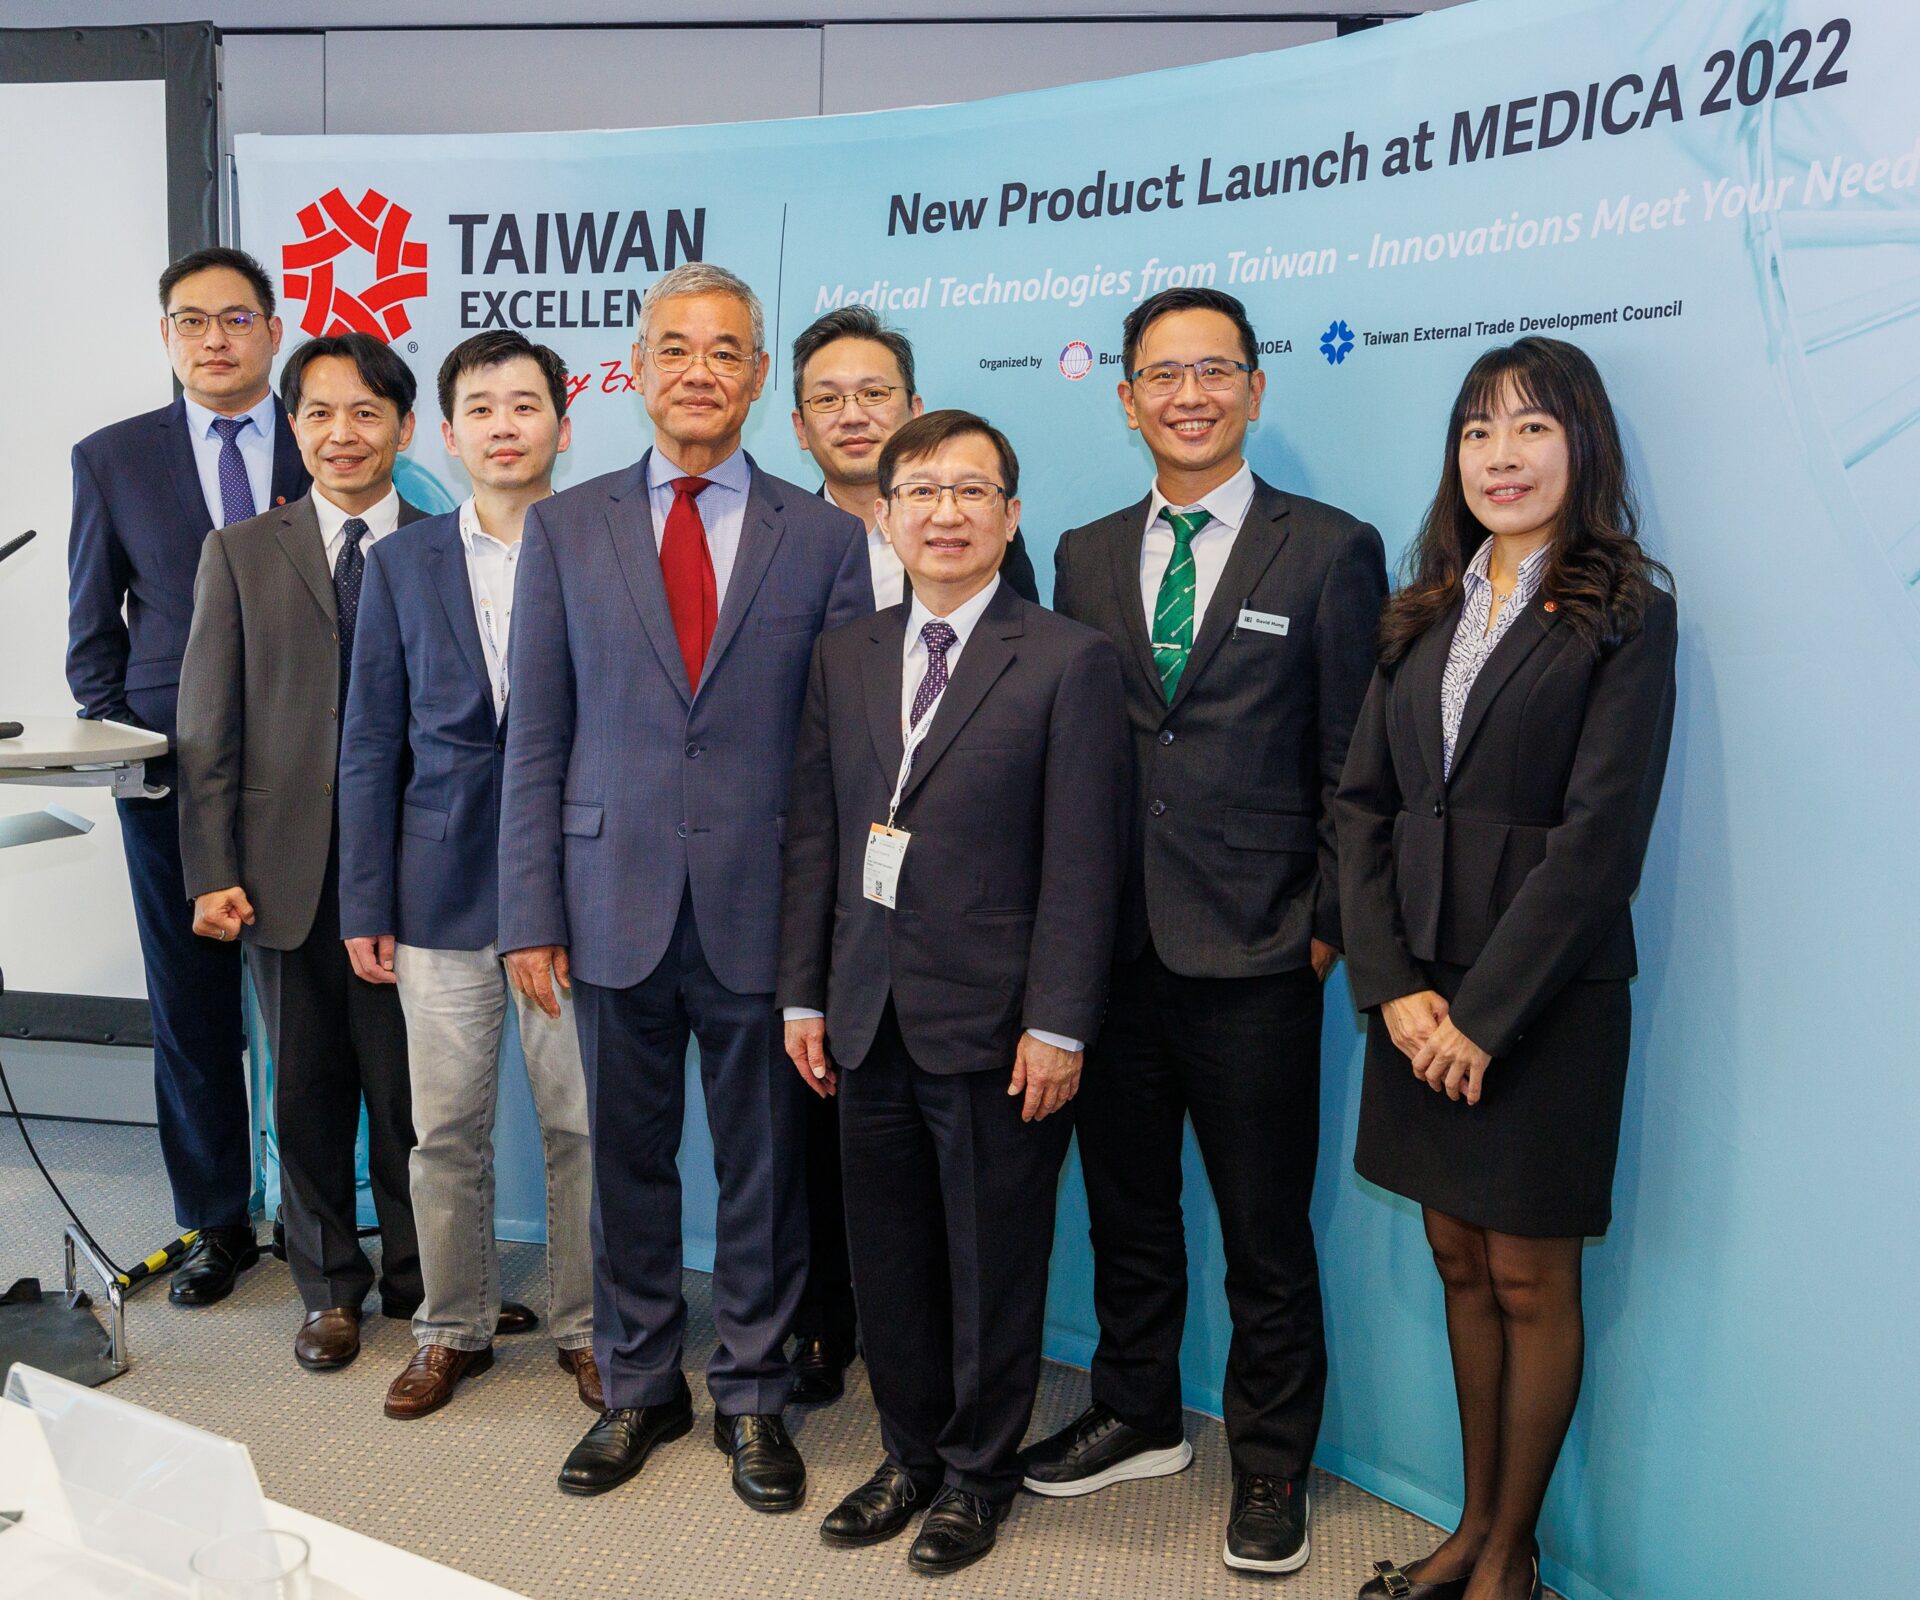 Taiwan demonstrates leading innovation skills at MEDICA 2022